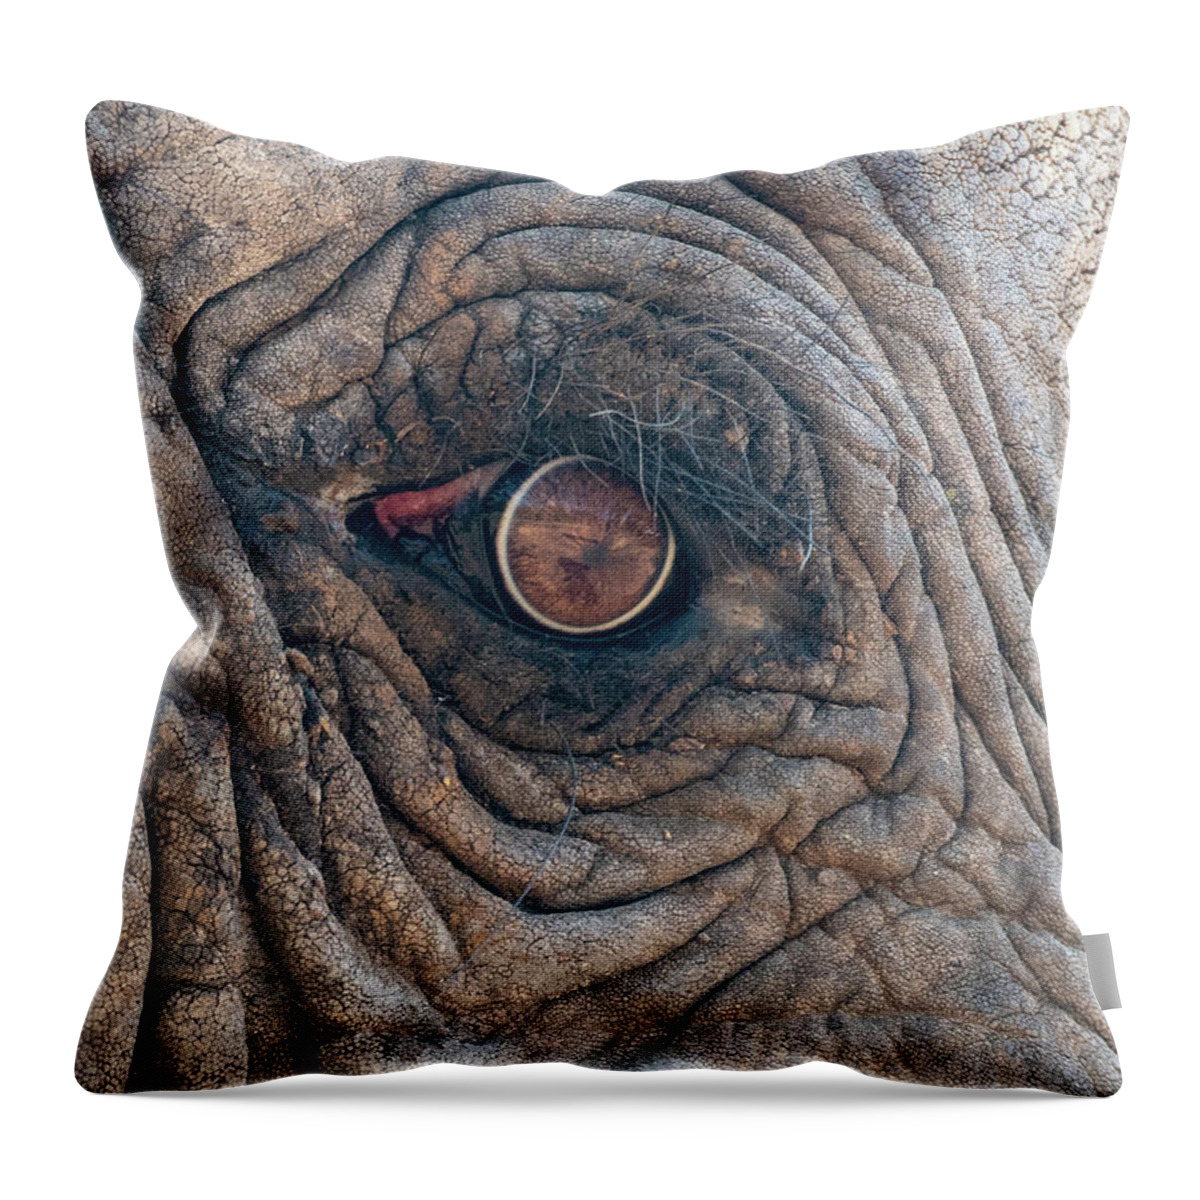 Elephant Throw Pillow featuring the photograph Elephant Eye by Mark Hunter